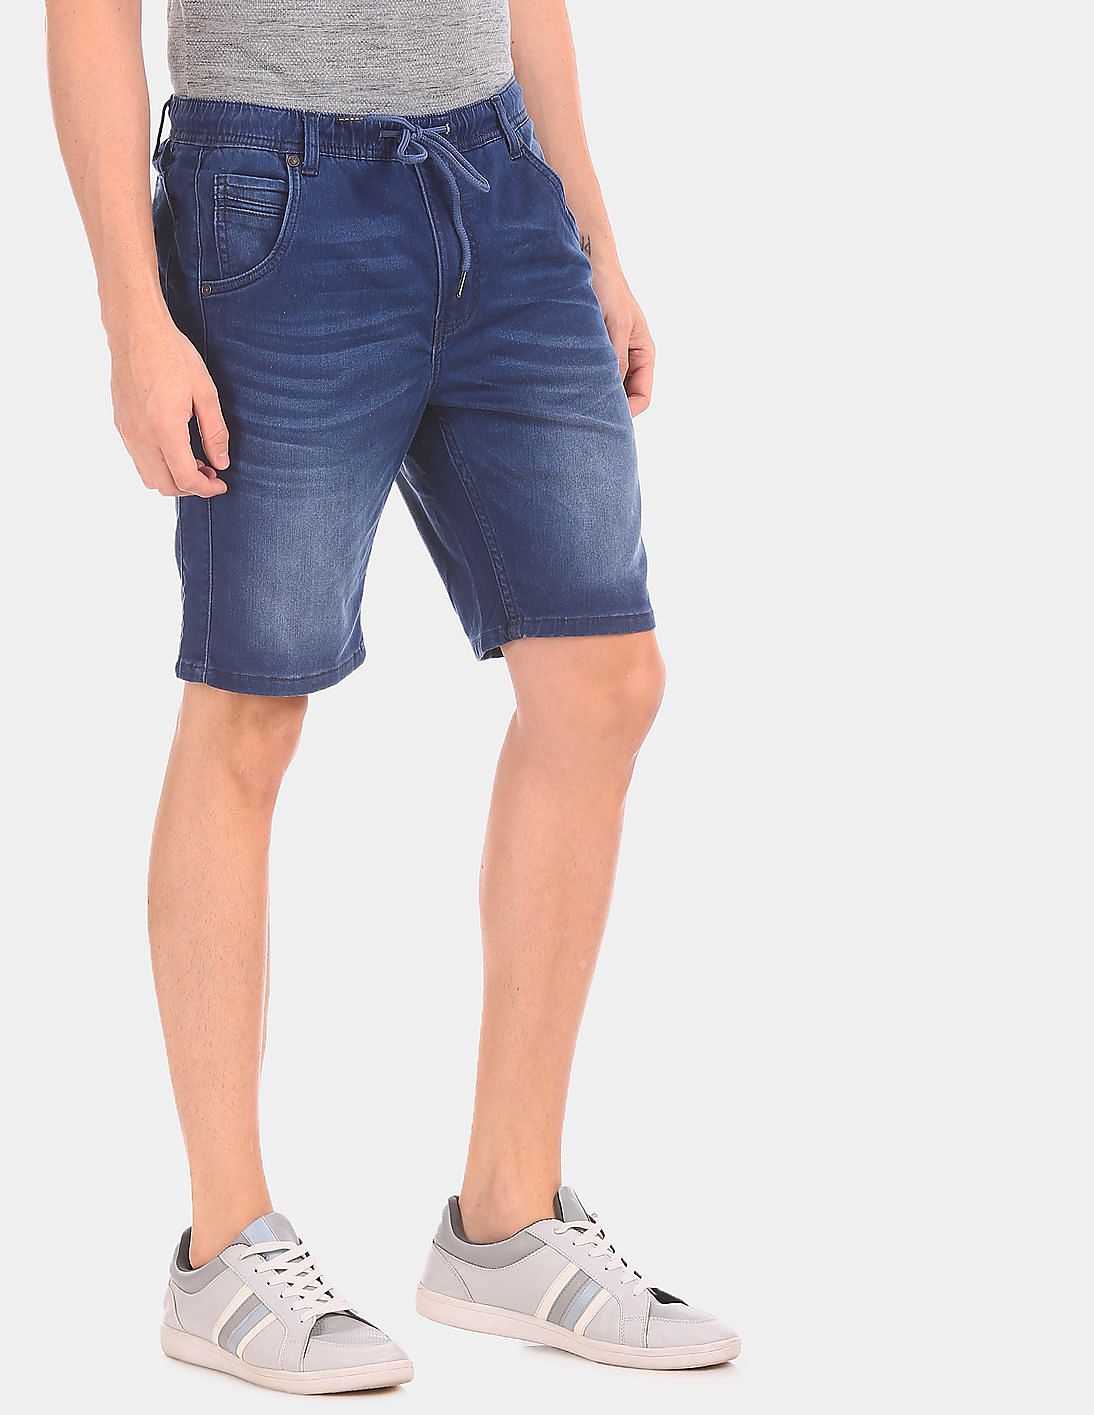 drawstring blue jean shorts